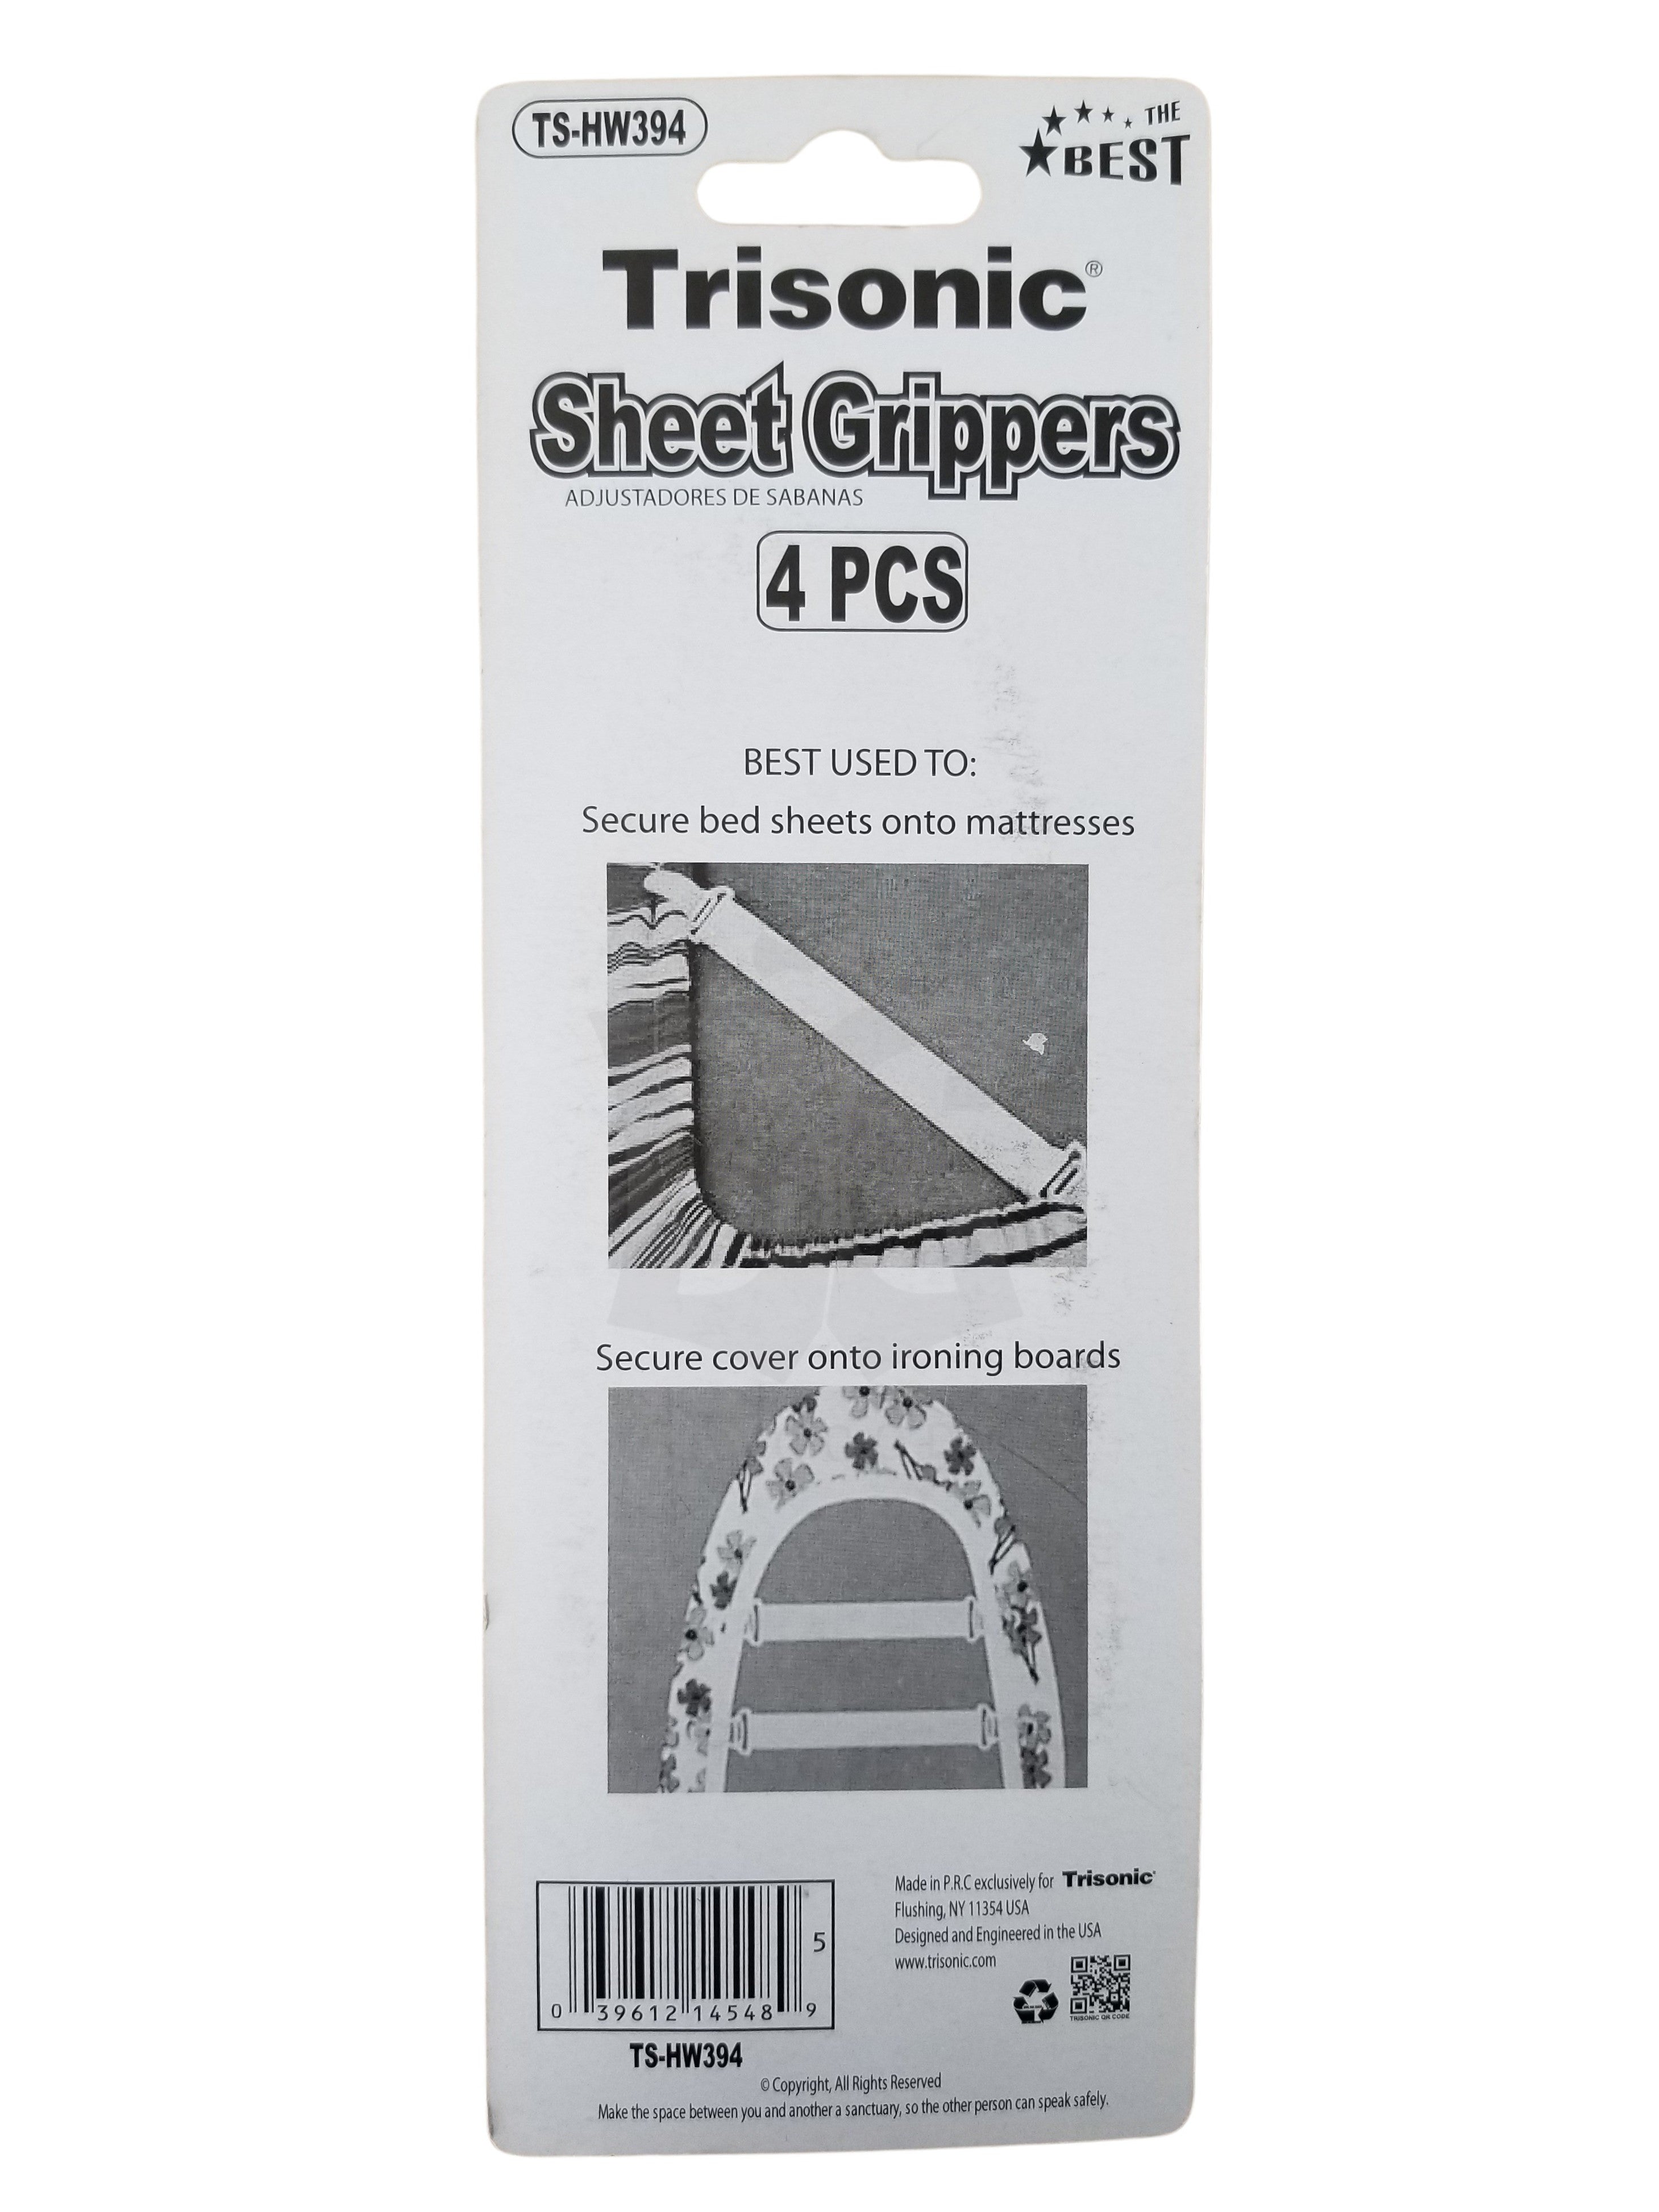 Trisonic Sheet Grippers 4 Pcs